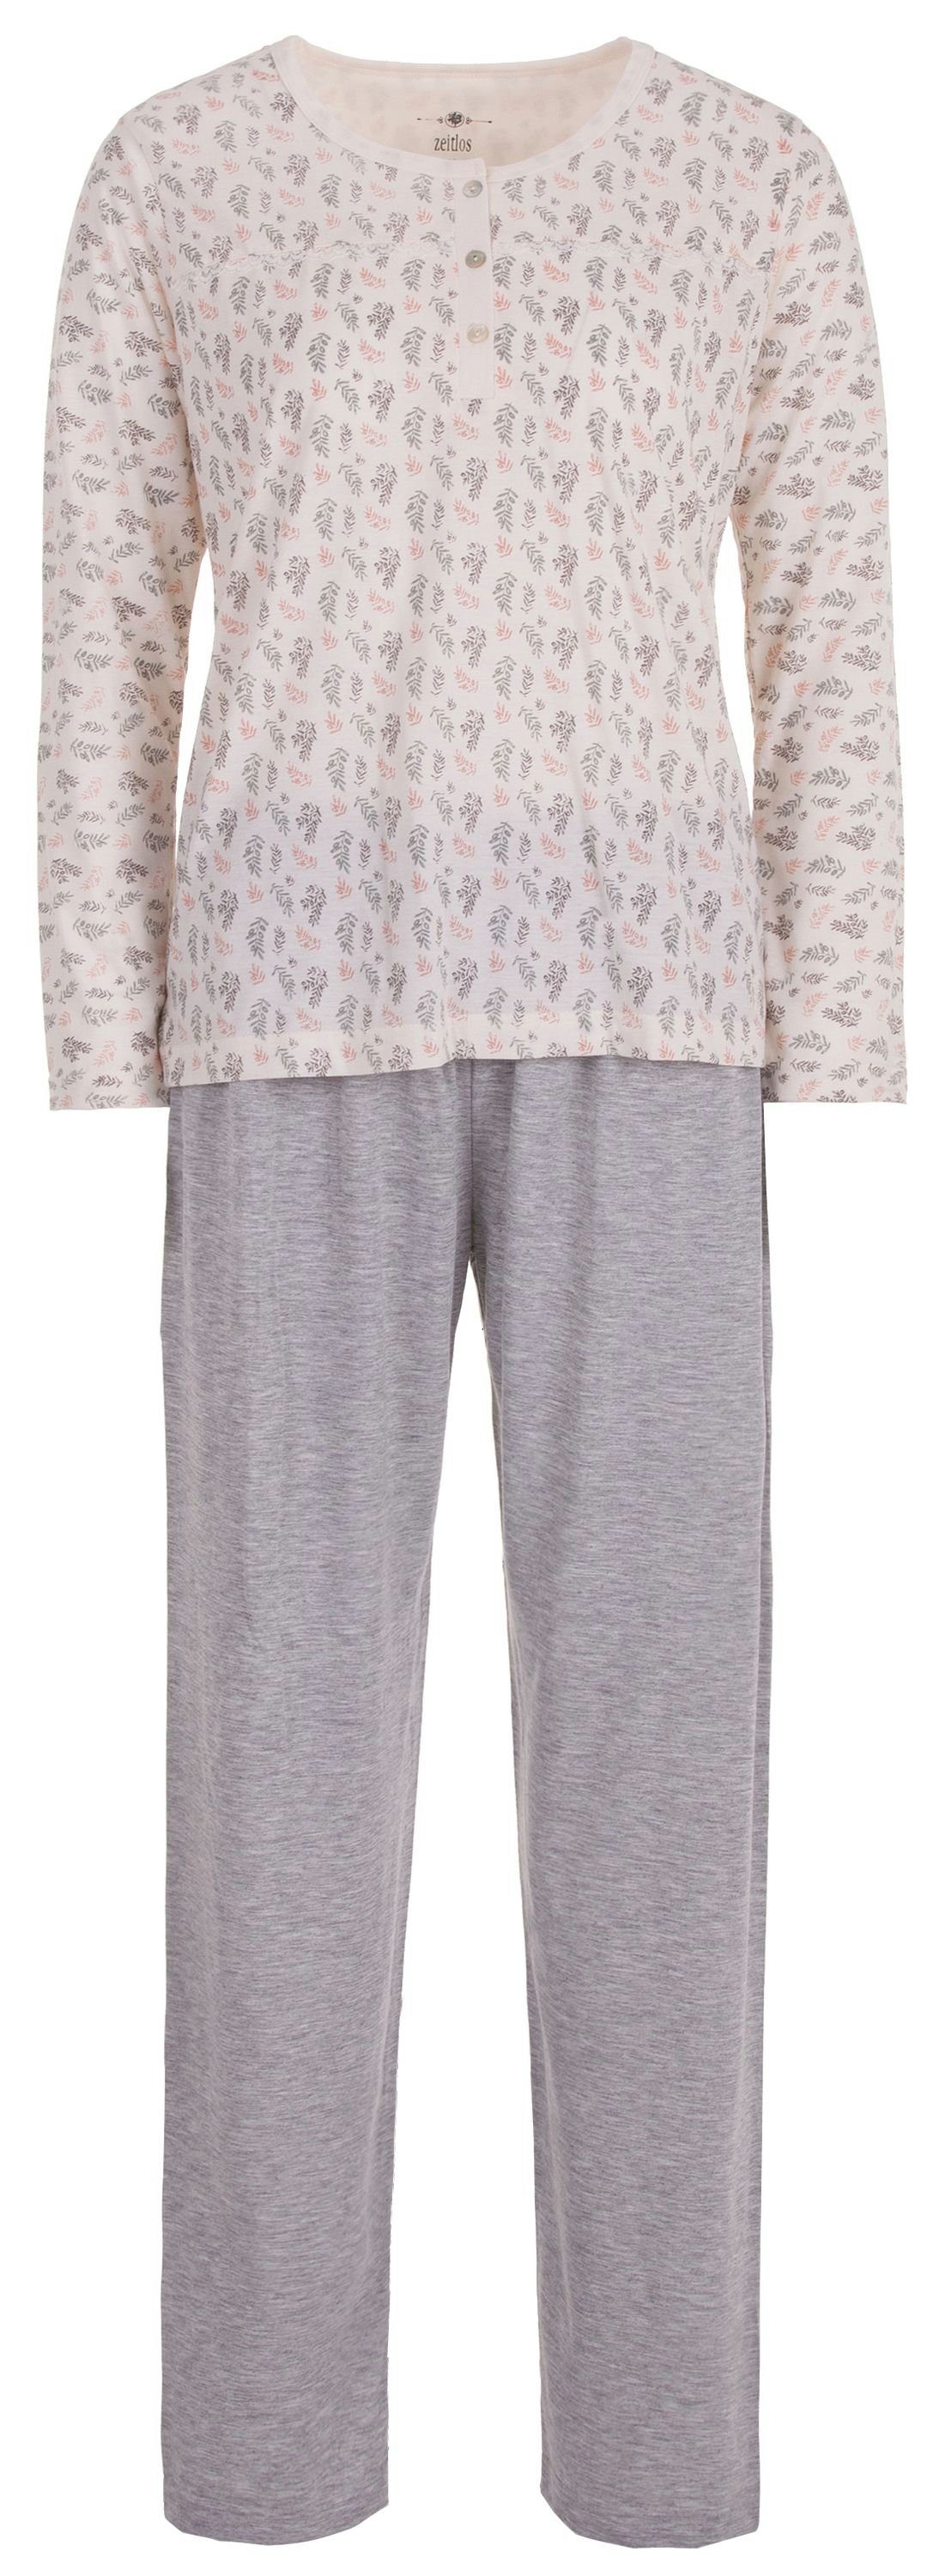 zeitlos Schlafanzug Pyjama Set Langarm - Zweige rosa